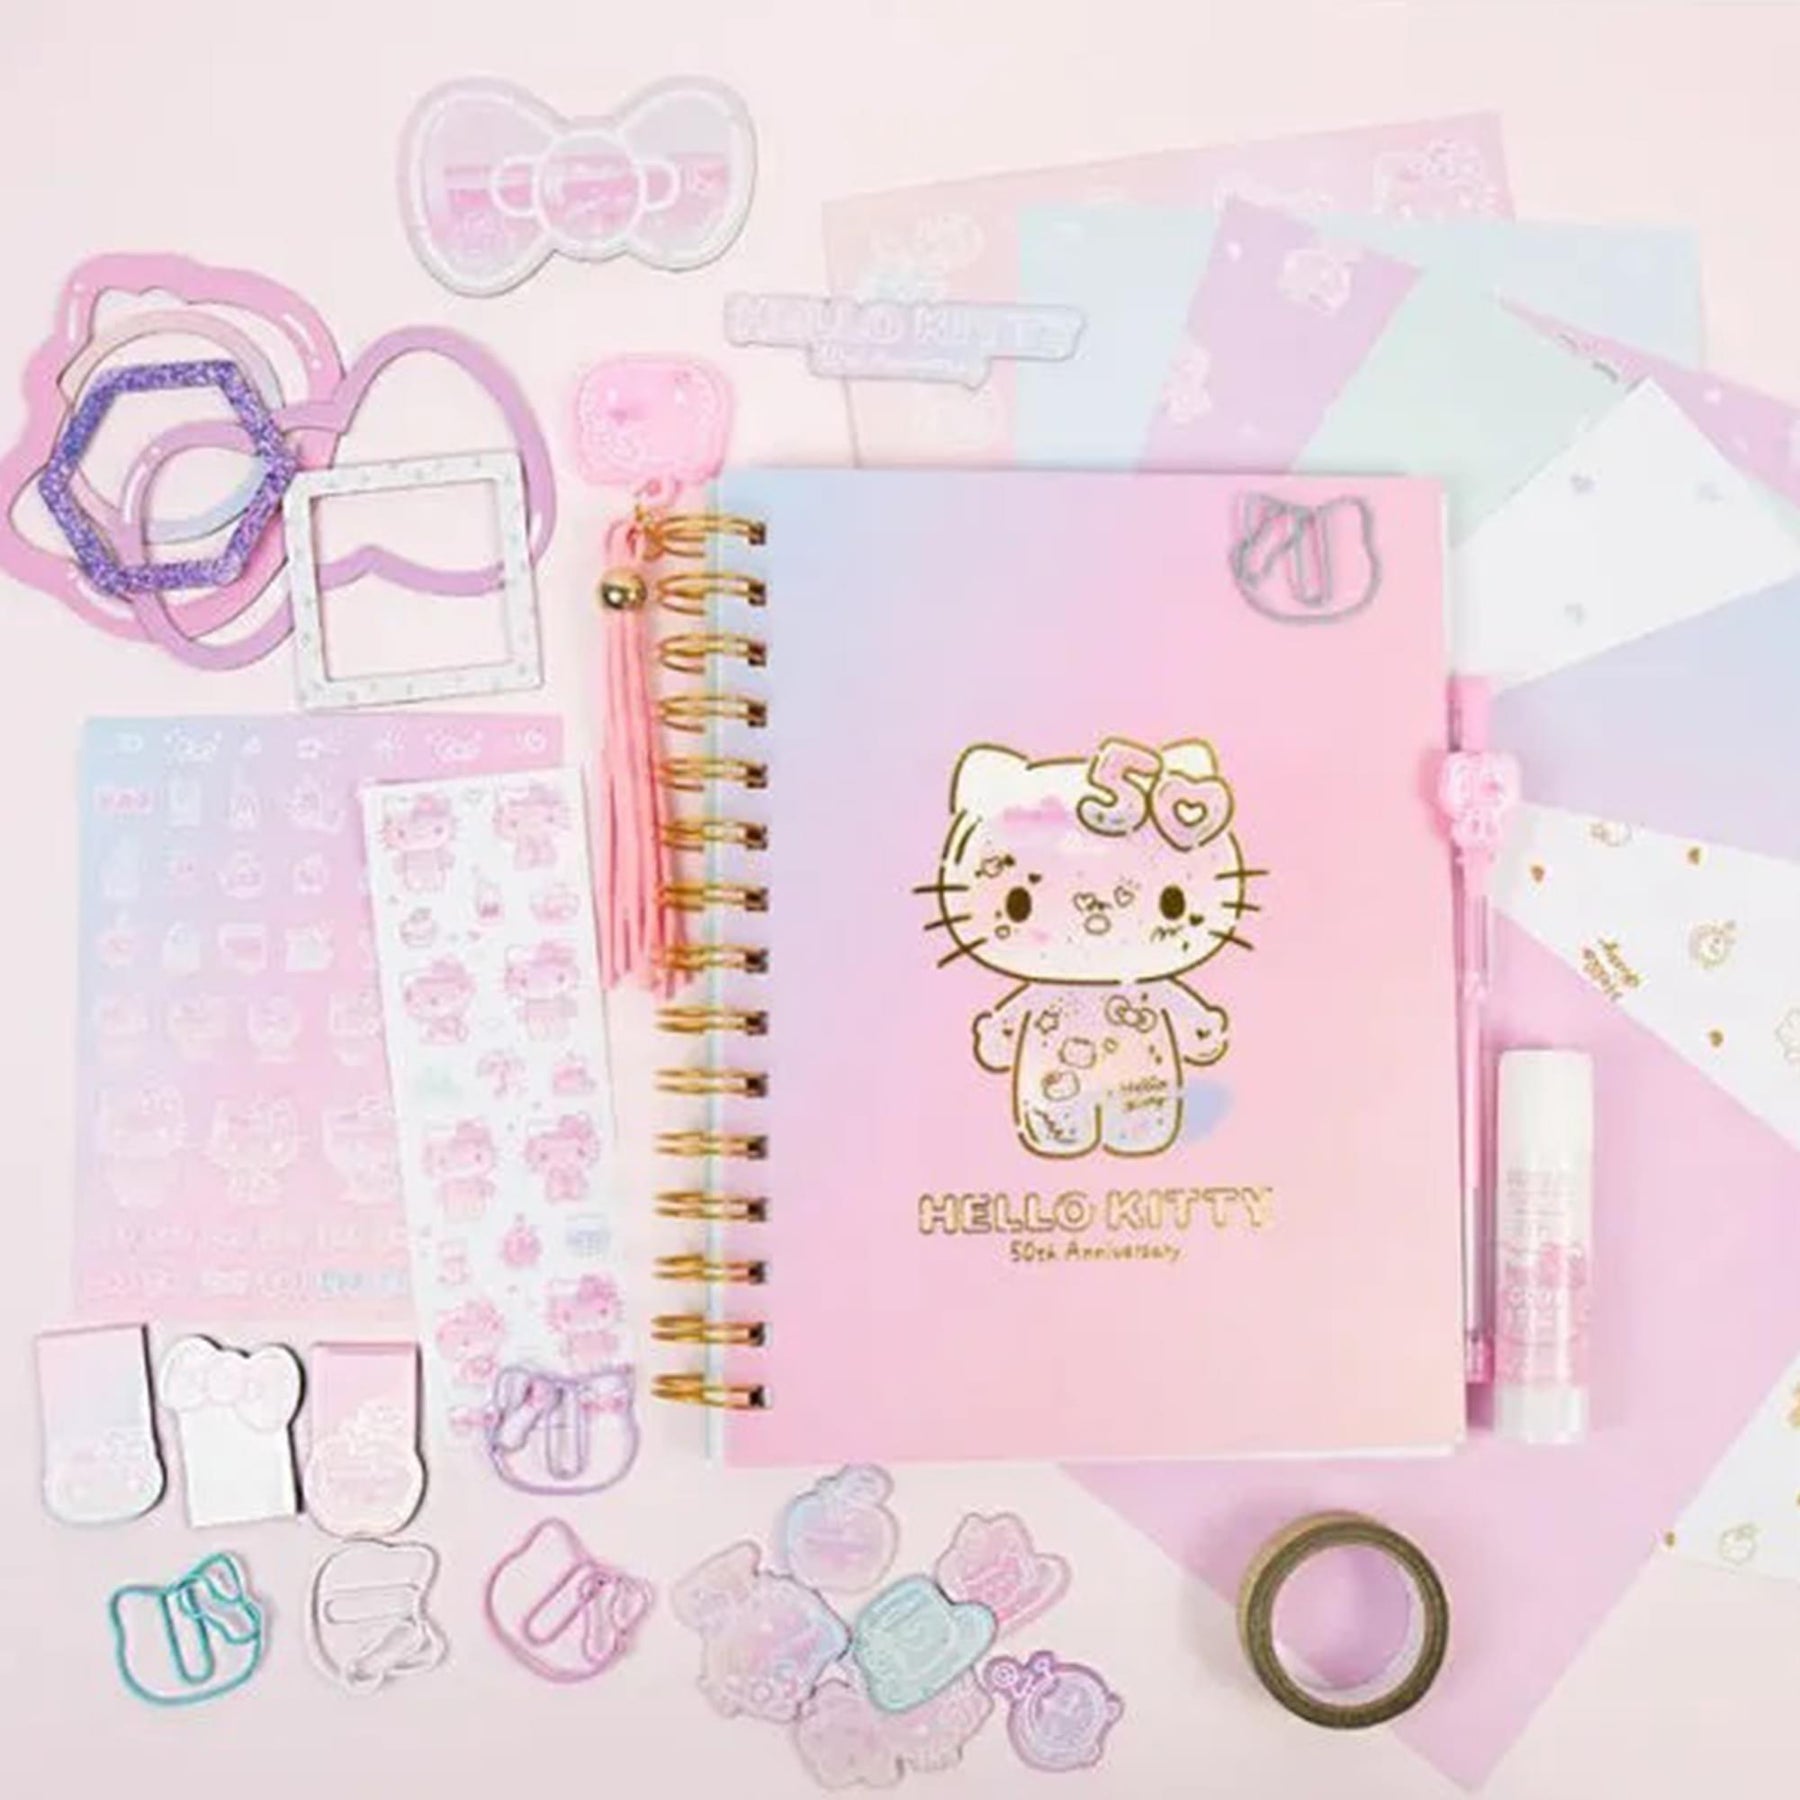 Sanrio Hello Kitty x STMT 50th Anniversary DIY Journaling Set